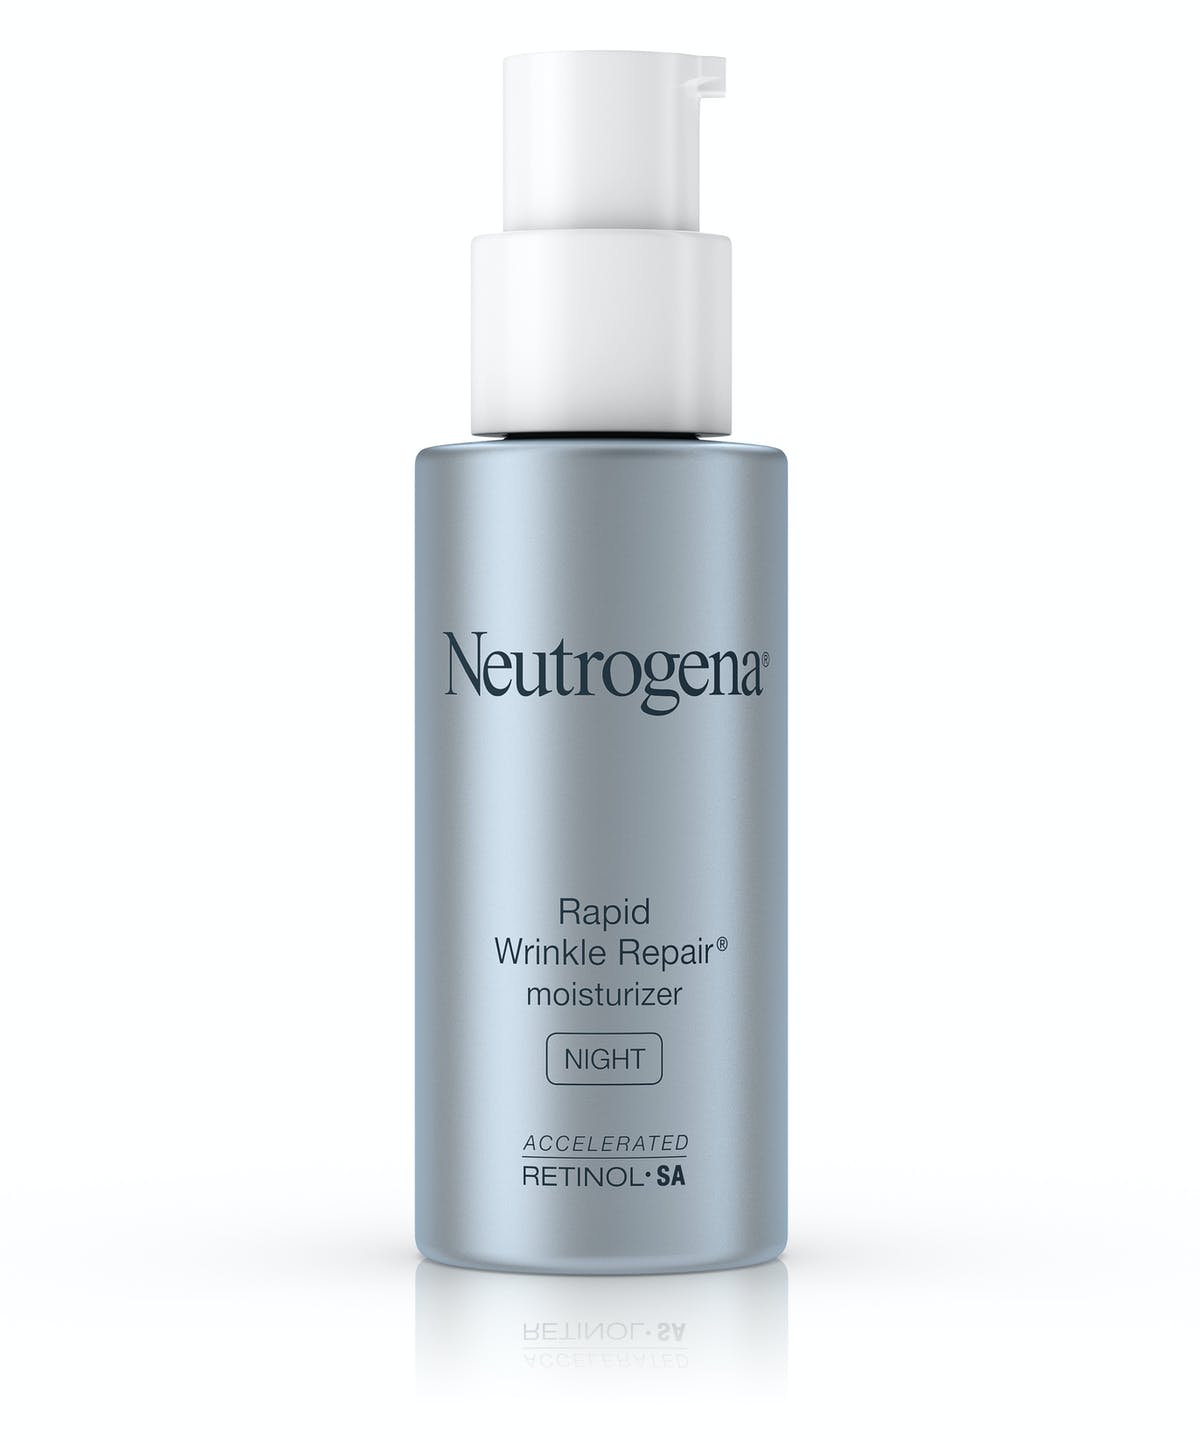 Neutrogena Wrinkle Repair Moisturizer - Night - Makeup Stash Pakistan - Neutrogena